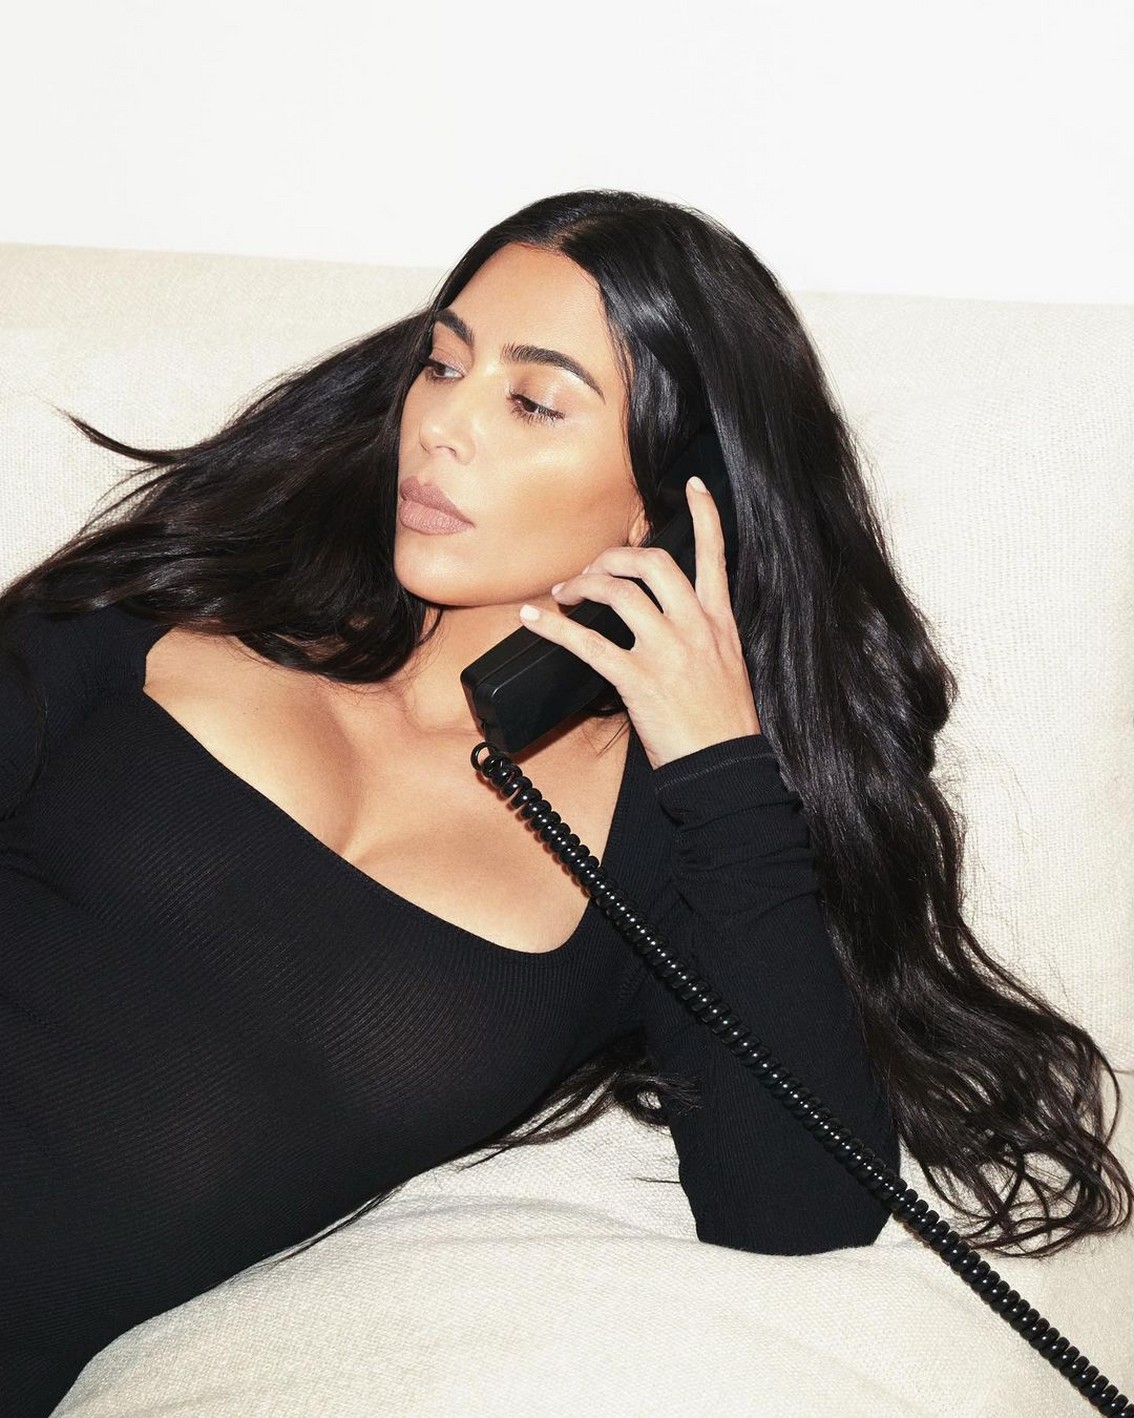 Kim Kardashian Sexy In Tight Black Dress TheFappening.Pro 2 - Kim Kardashian Sexy In Tight Black Dress (3 Photos)